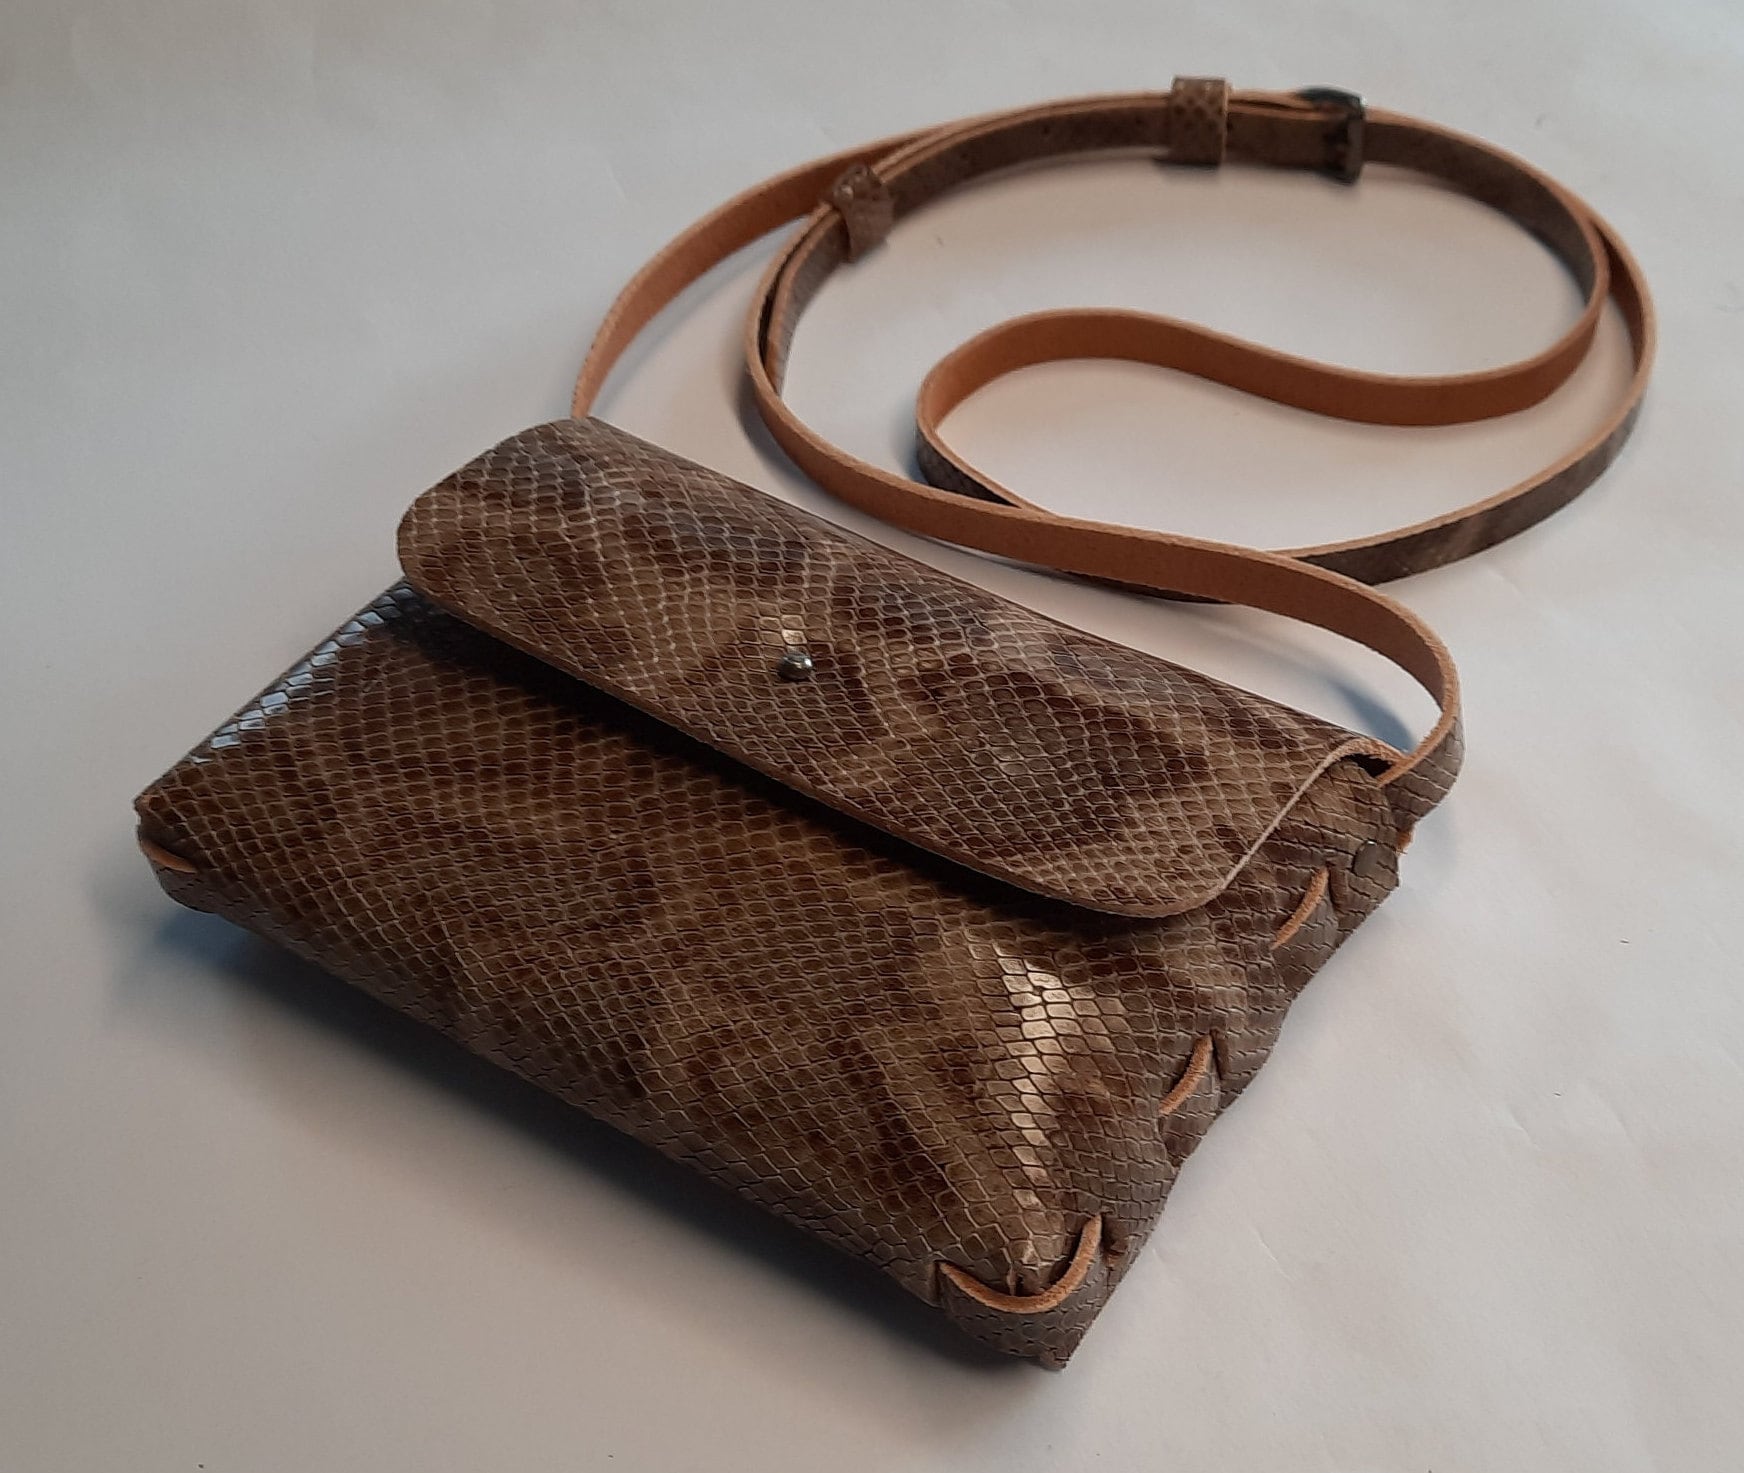 Fortune Cookie LV bag : r/handbags